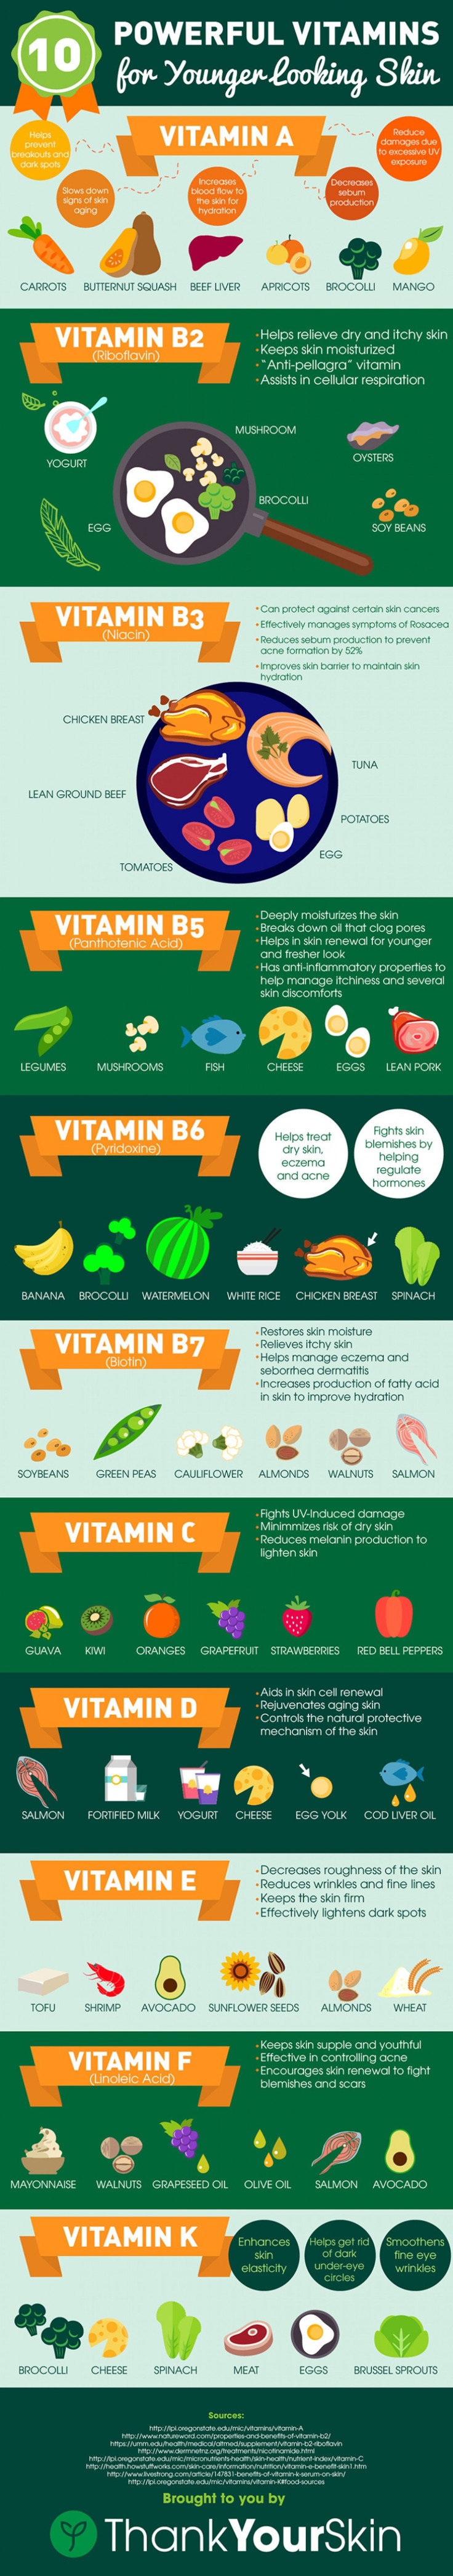 10 Powerful Vitamins